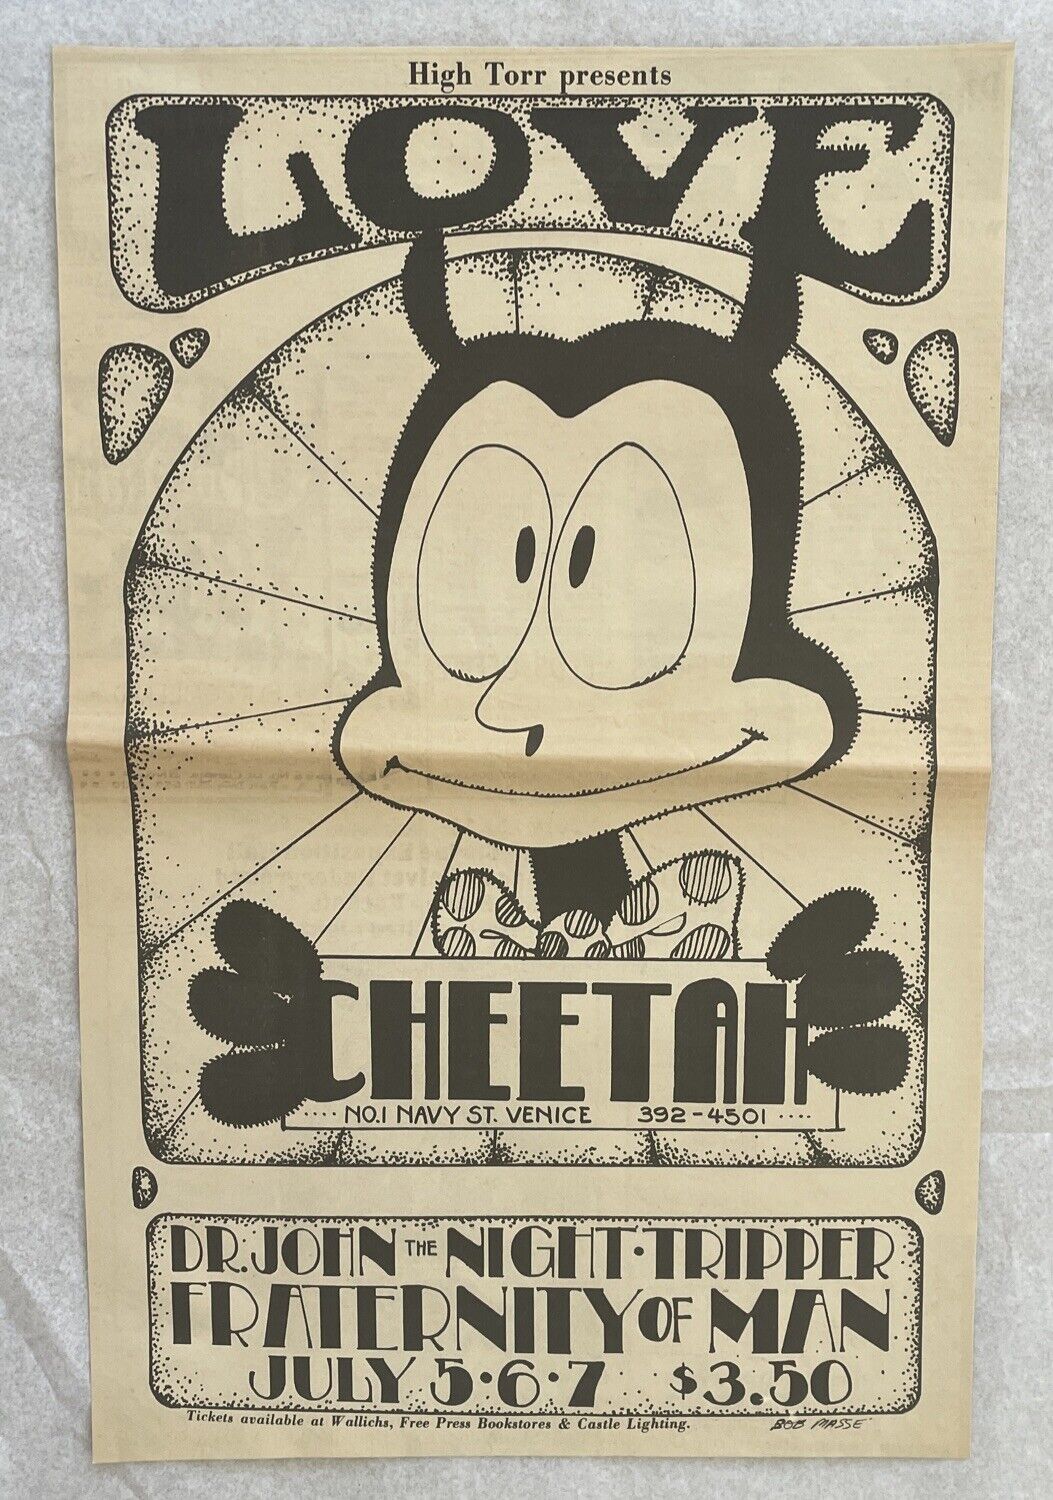 1968 LoVe, Dr. John, Fraternity Of Man, CHEETAH CLUB Venice Ca, Poster Type Ad